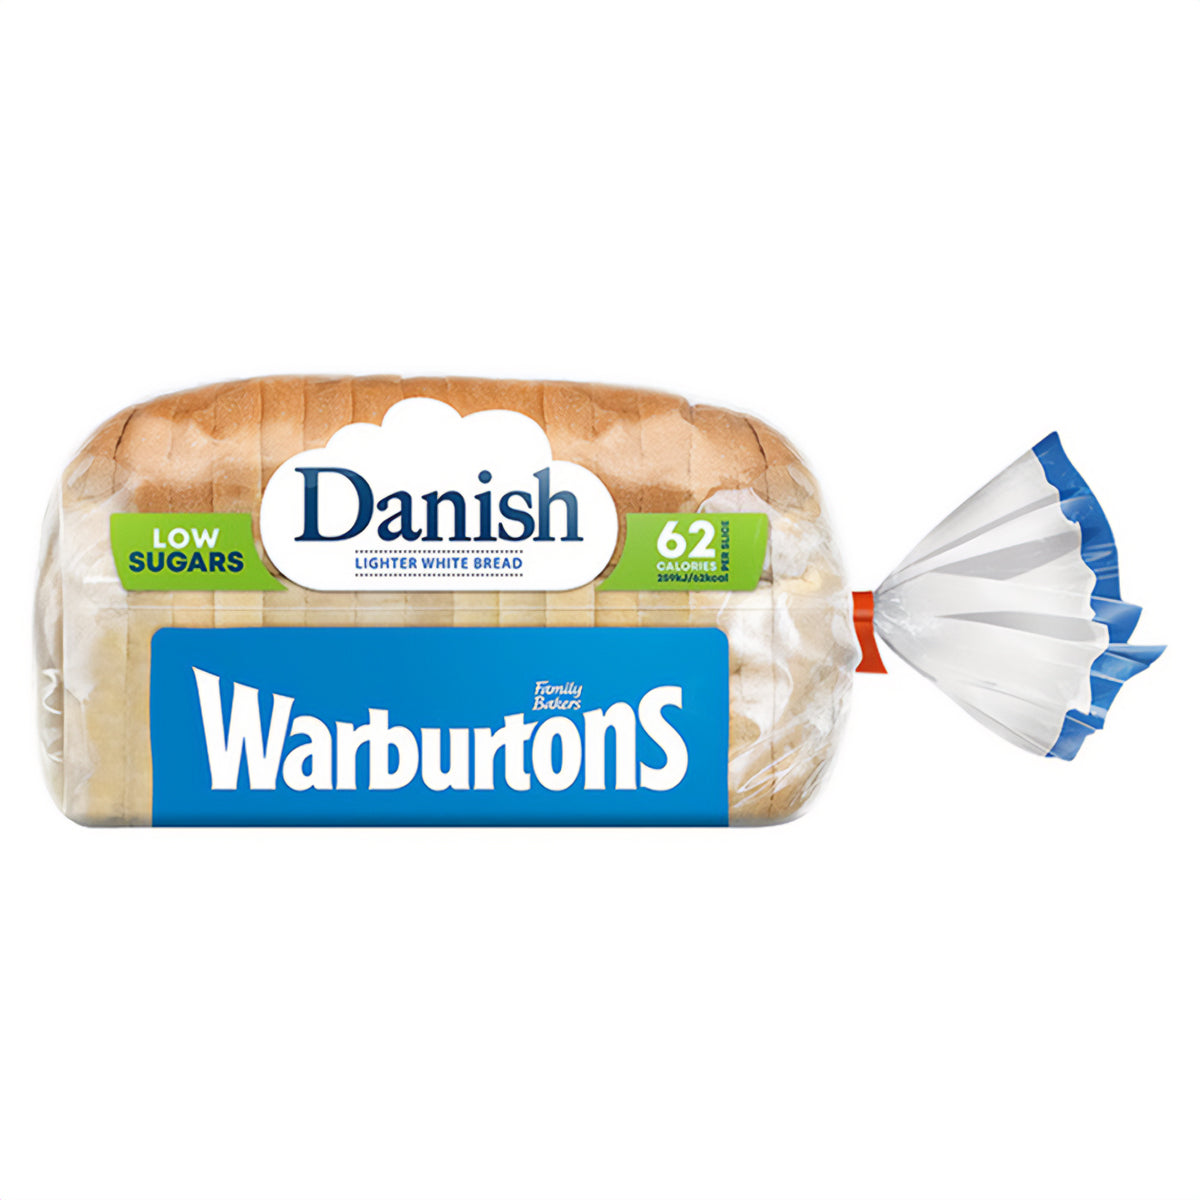 Warburtons - 400g Danish bread on a white background.